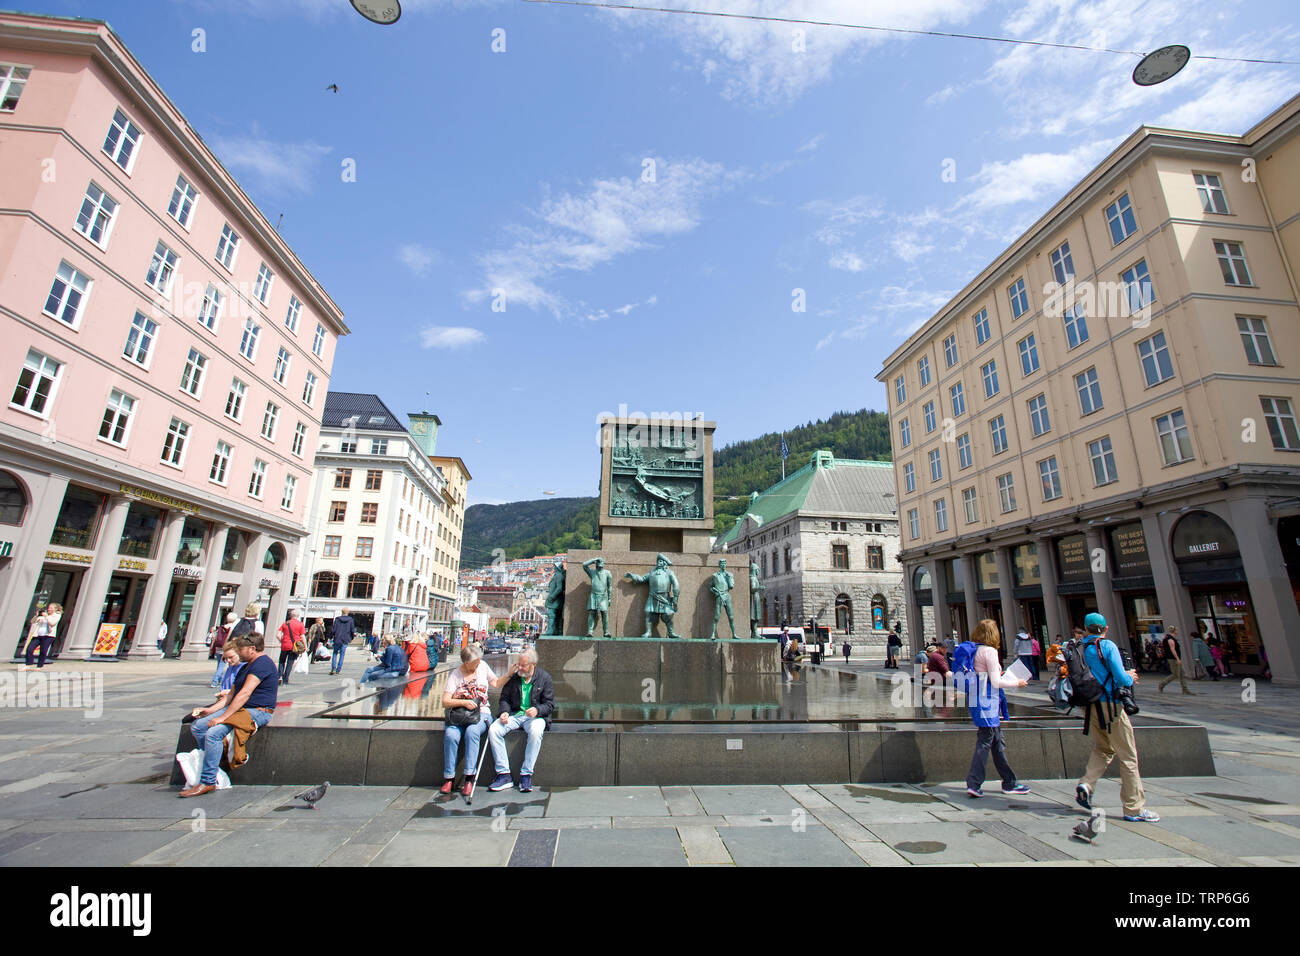 Torgalmennigen, Main square in city centre, Bergen,Norway Stock Photo